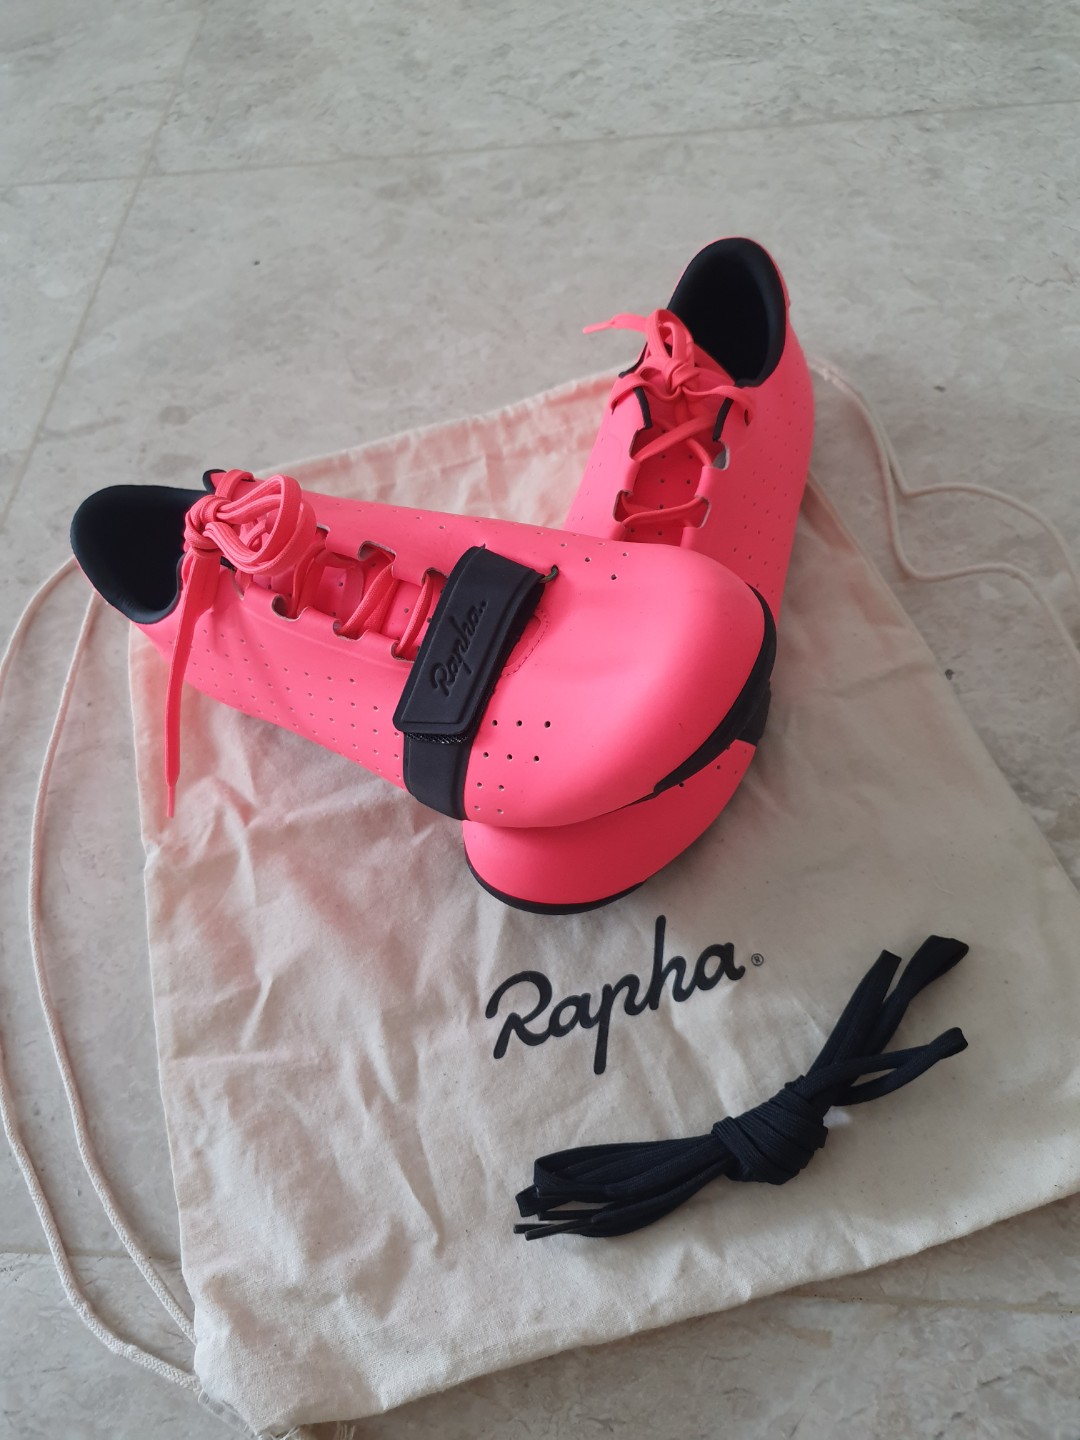 rapha pink shoes